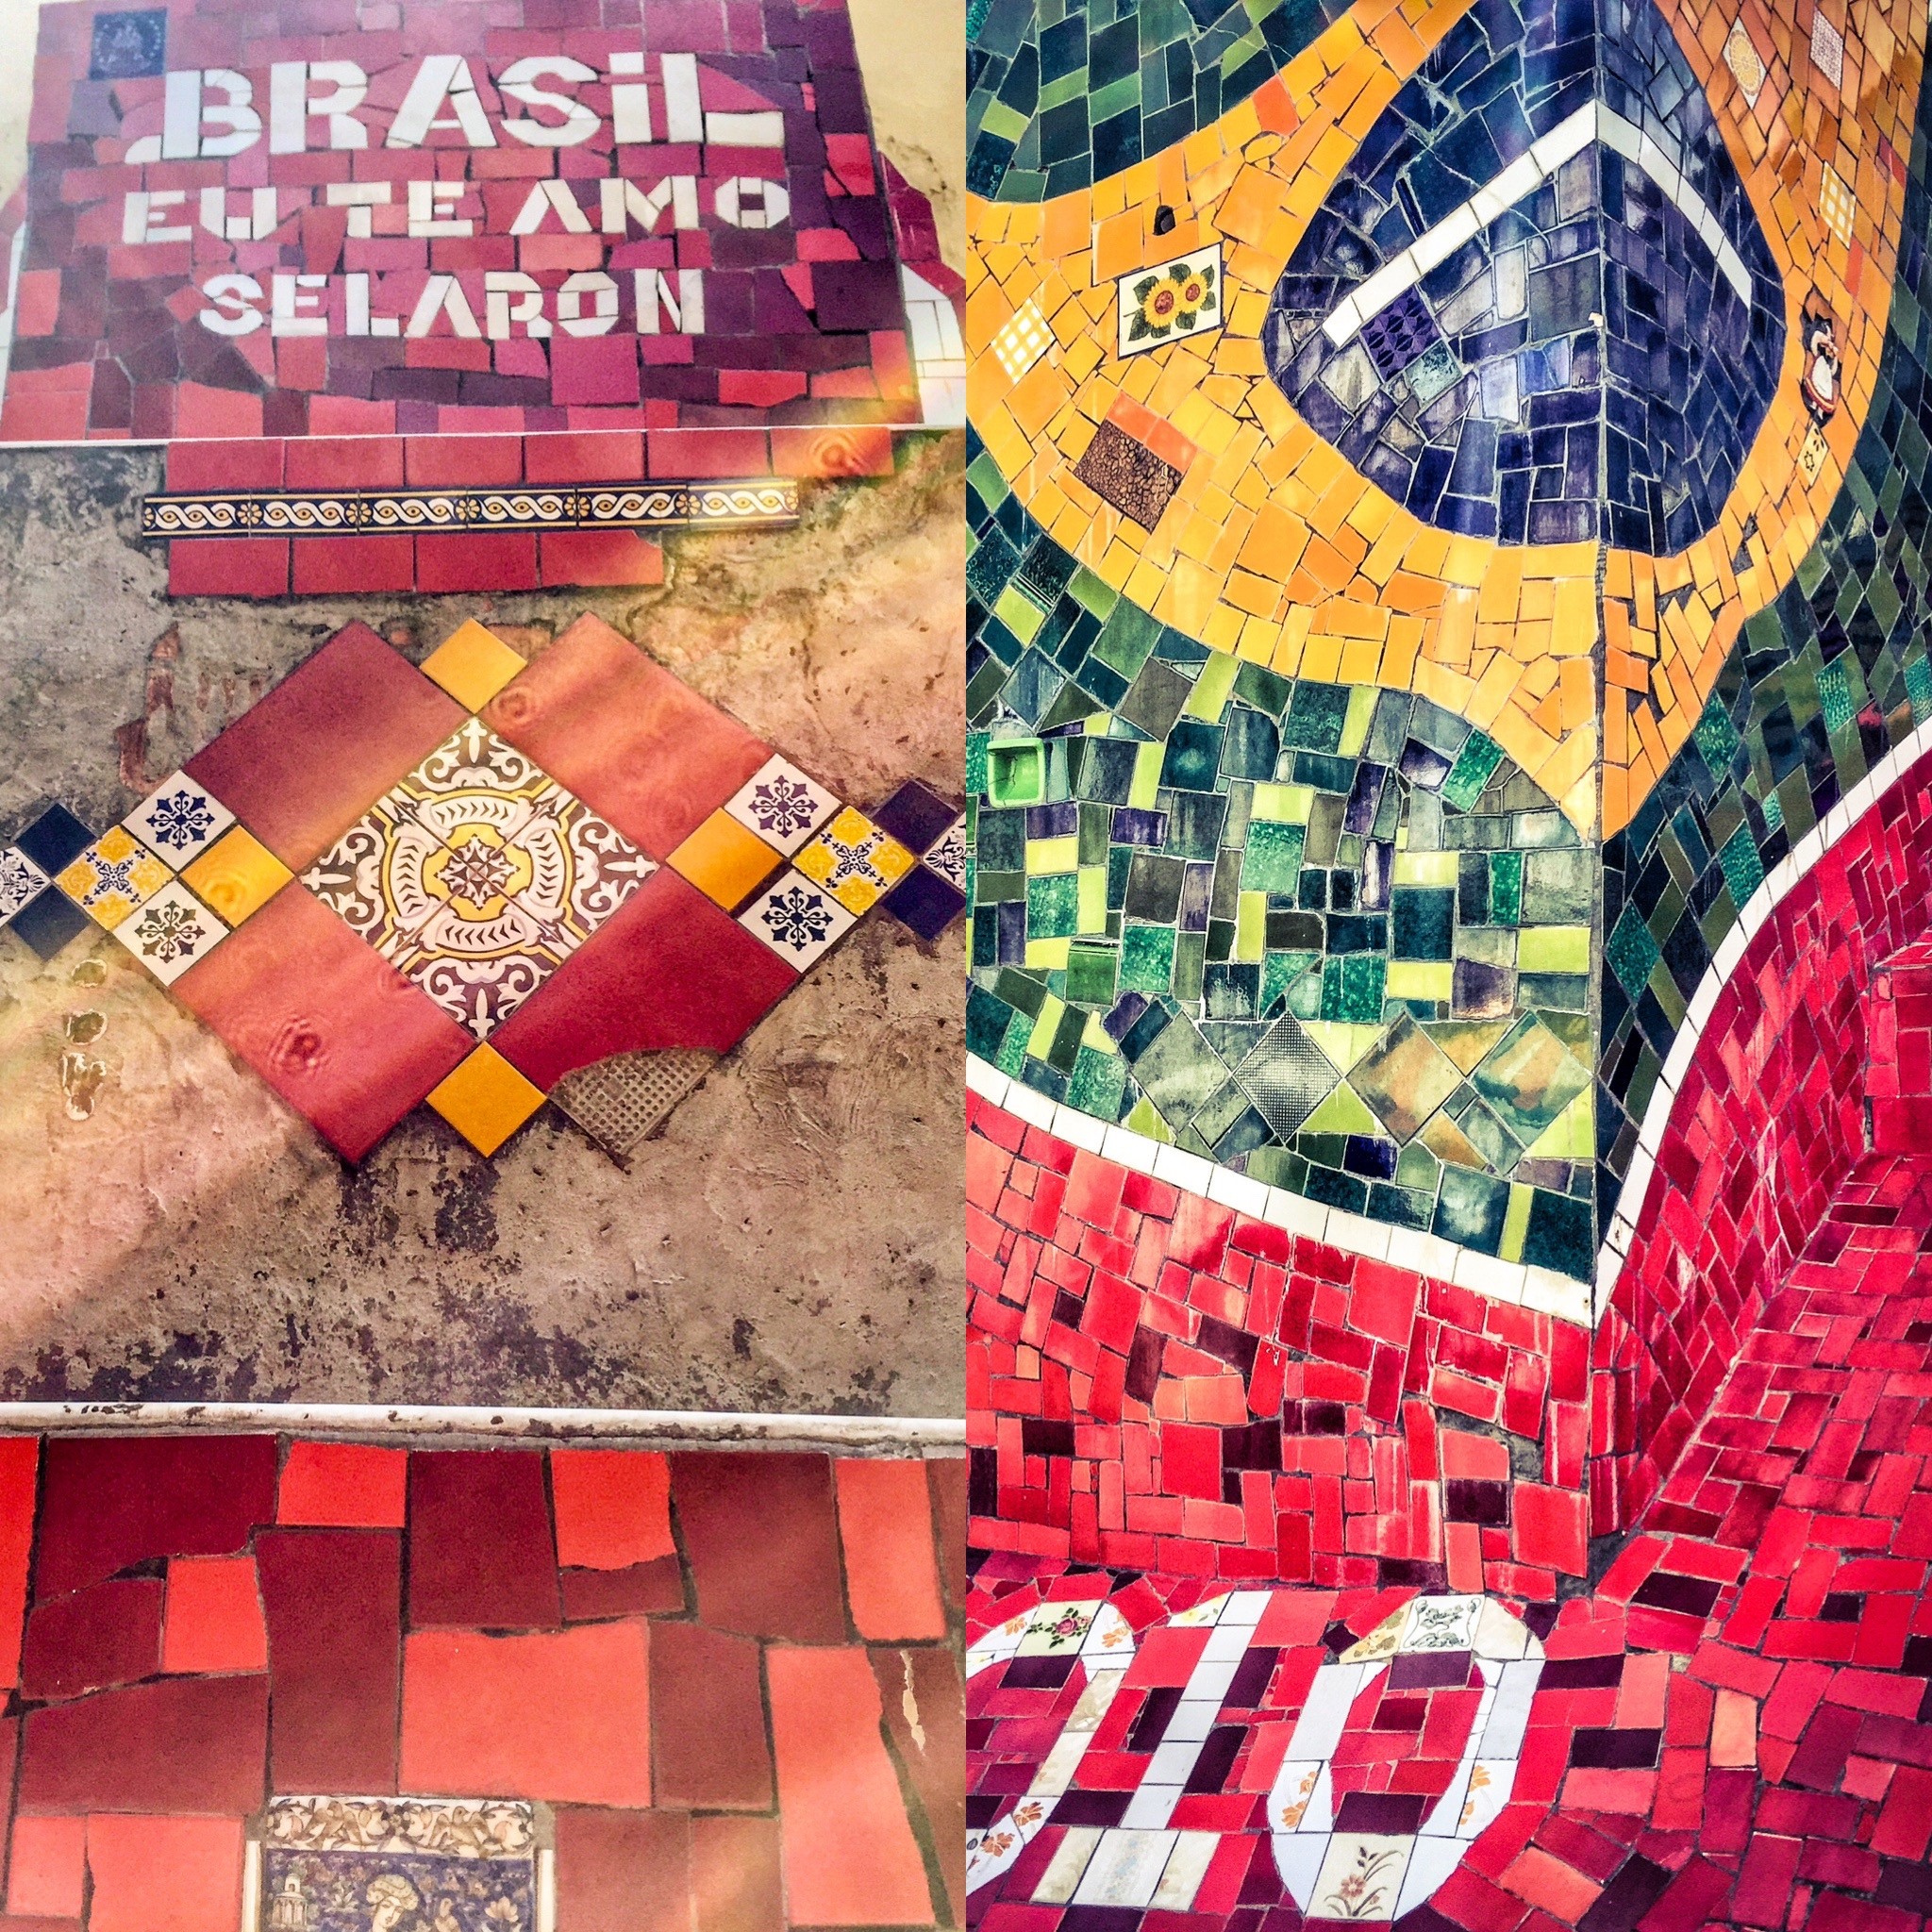 Close-ups of the mosaic tiling taken by Lewis